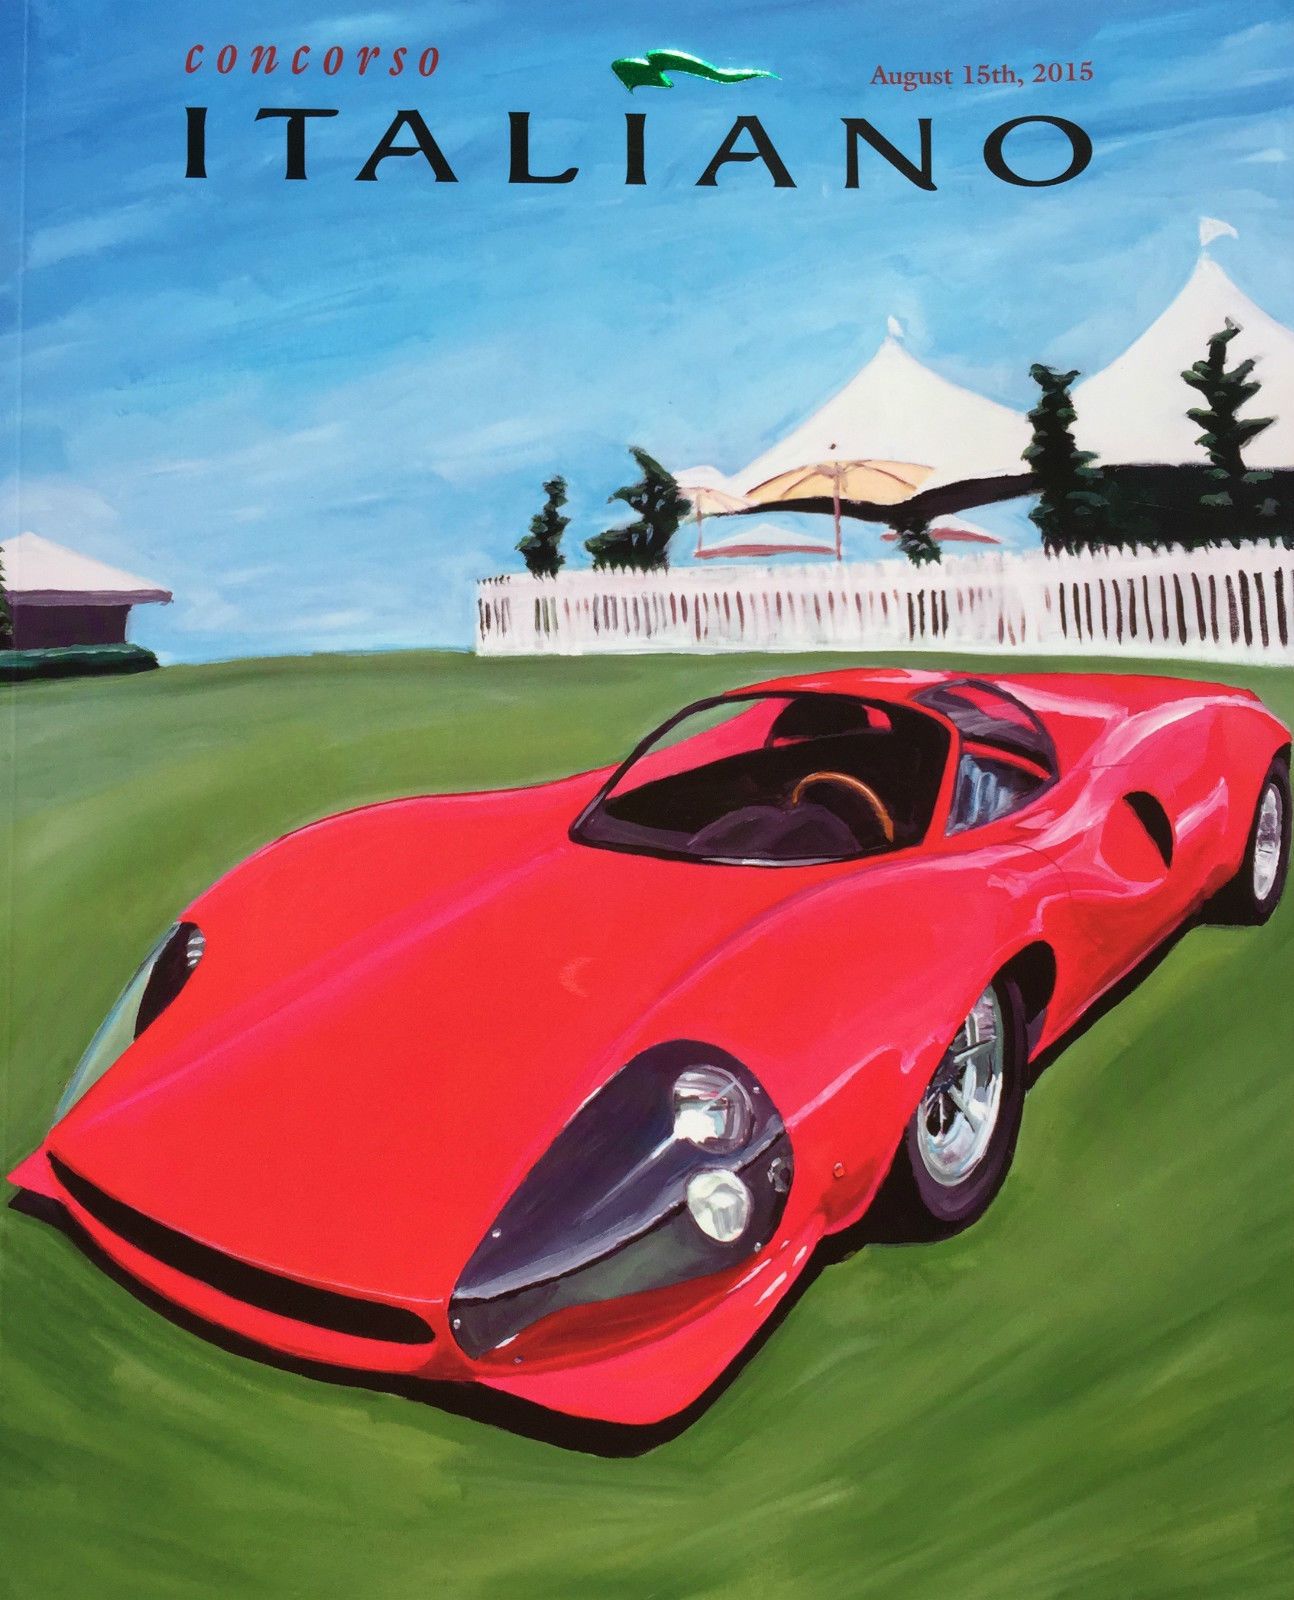 1967 Ferrari Thomassima II